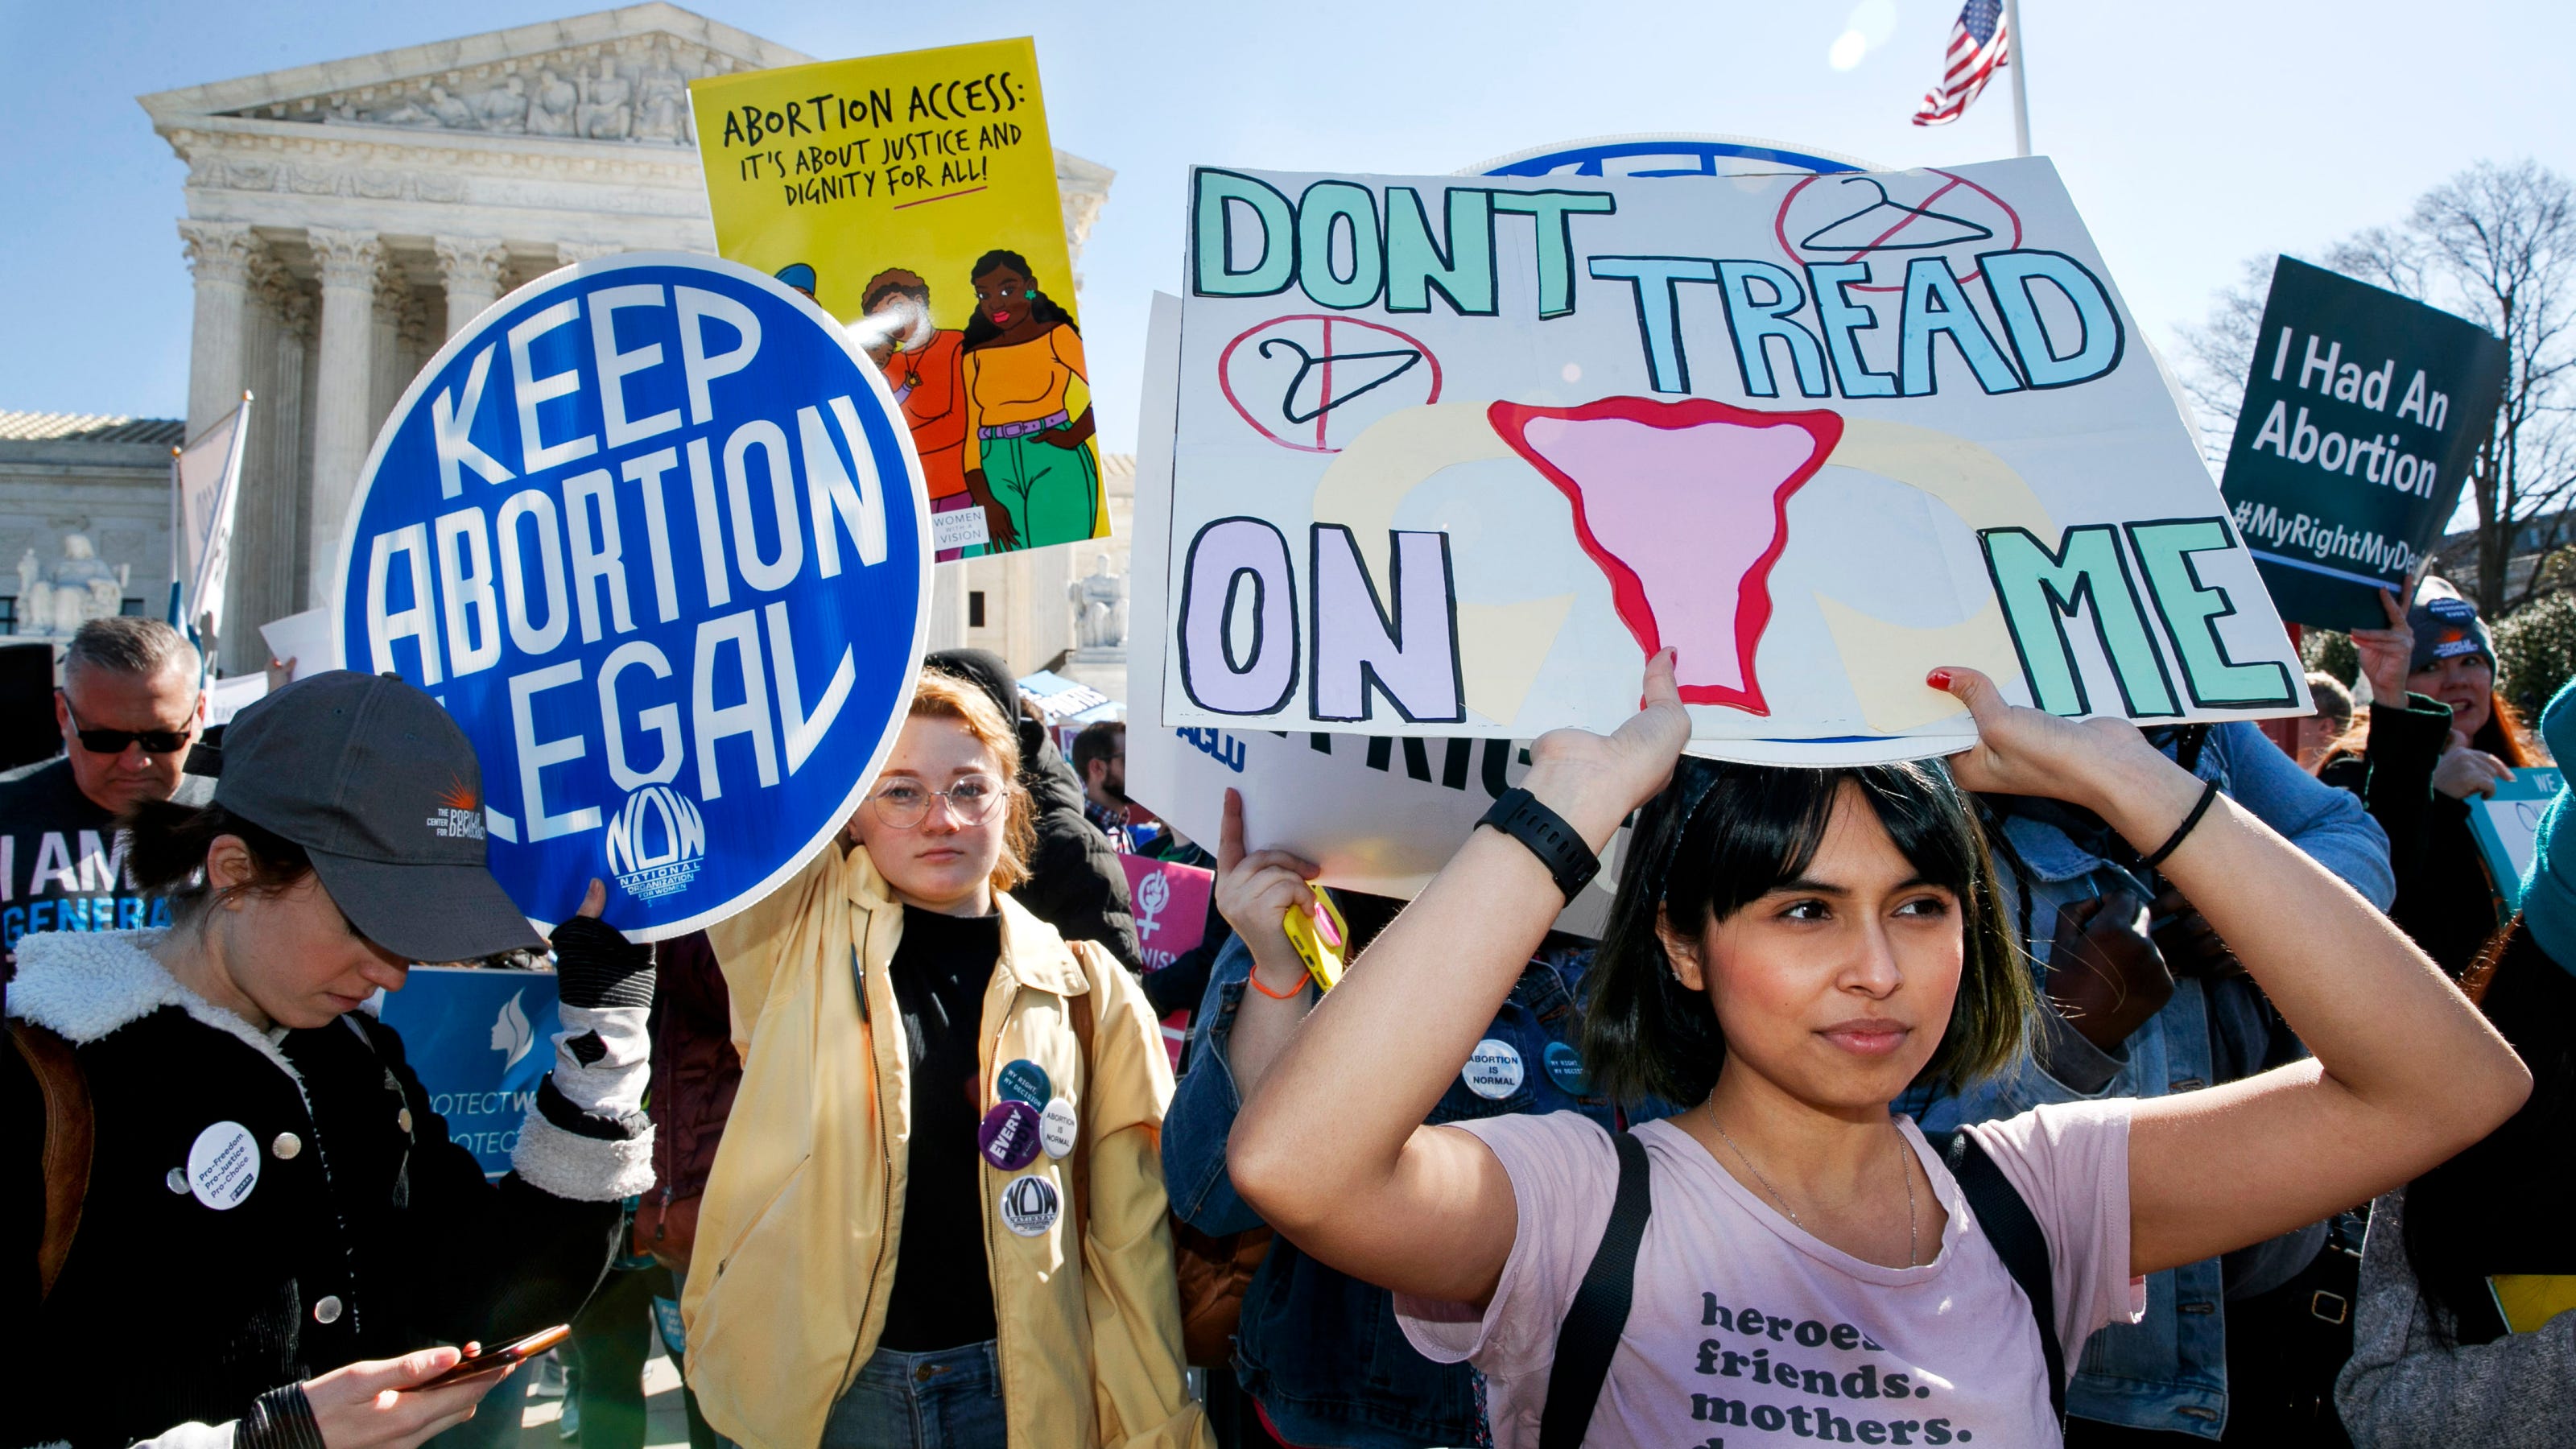 women seeking abortions in ar now need permission from men